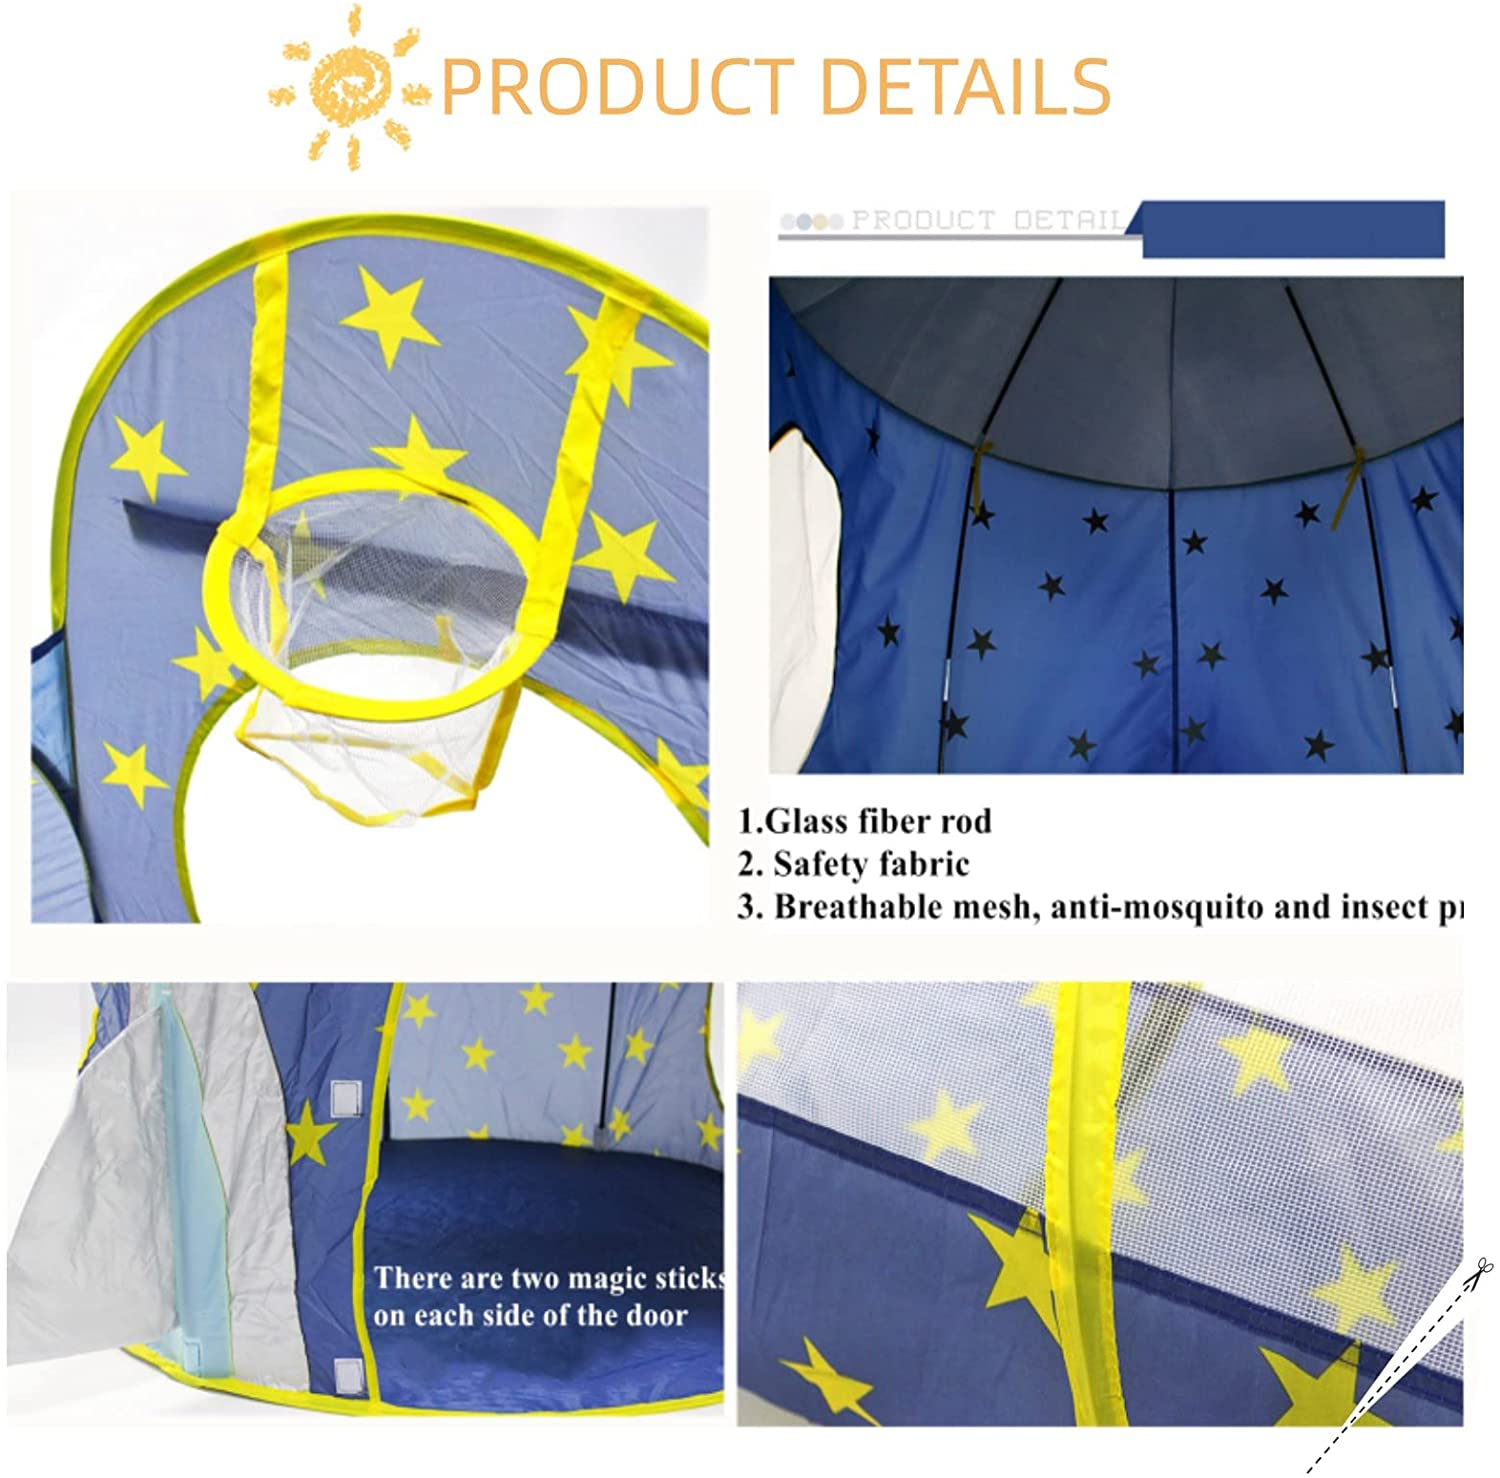 Blue Yurt Tunnel Tent Details